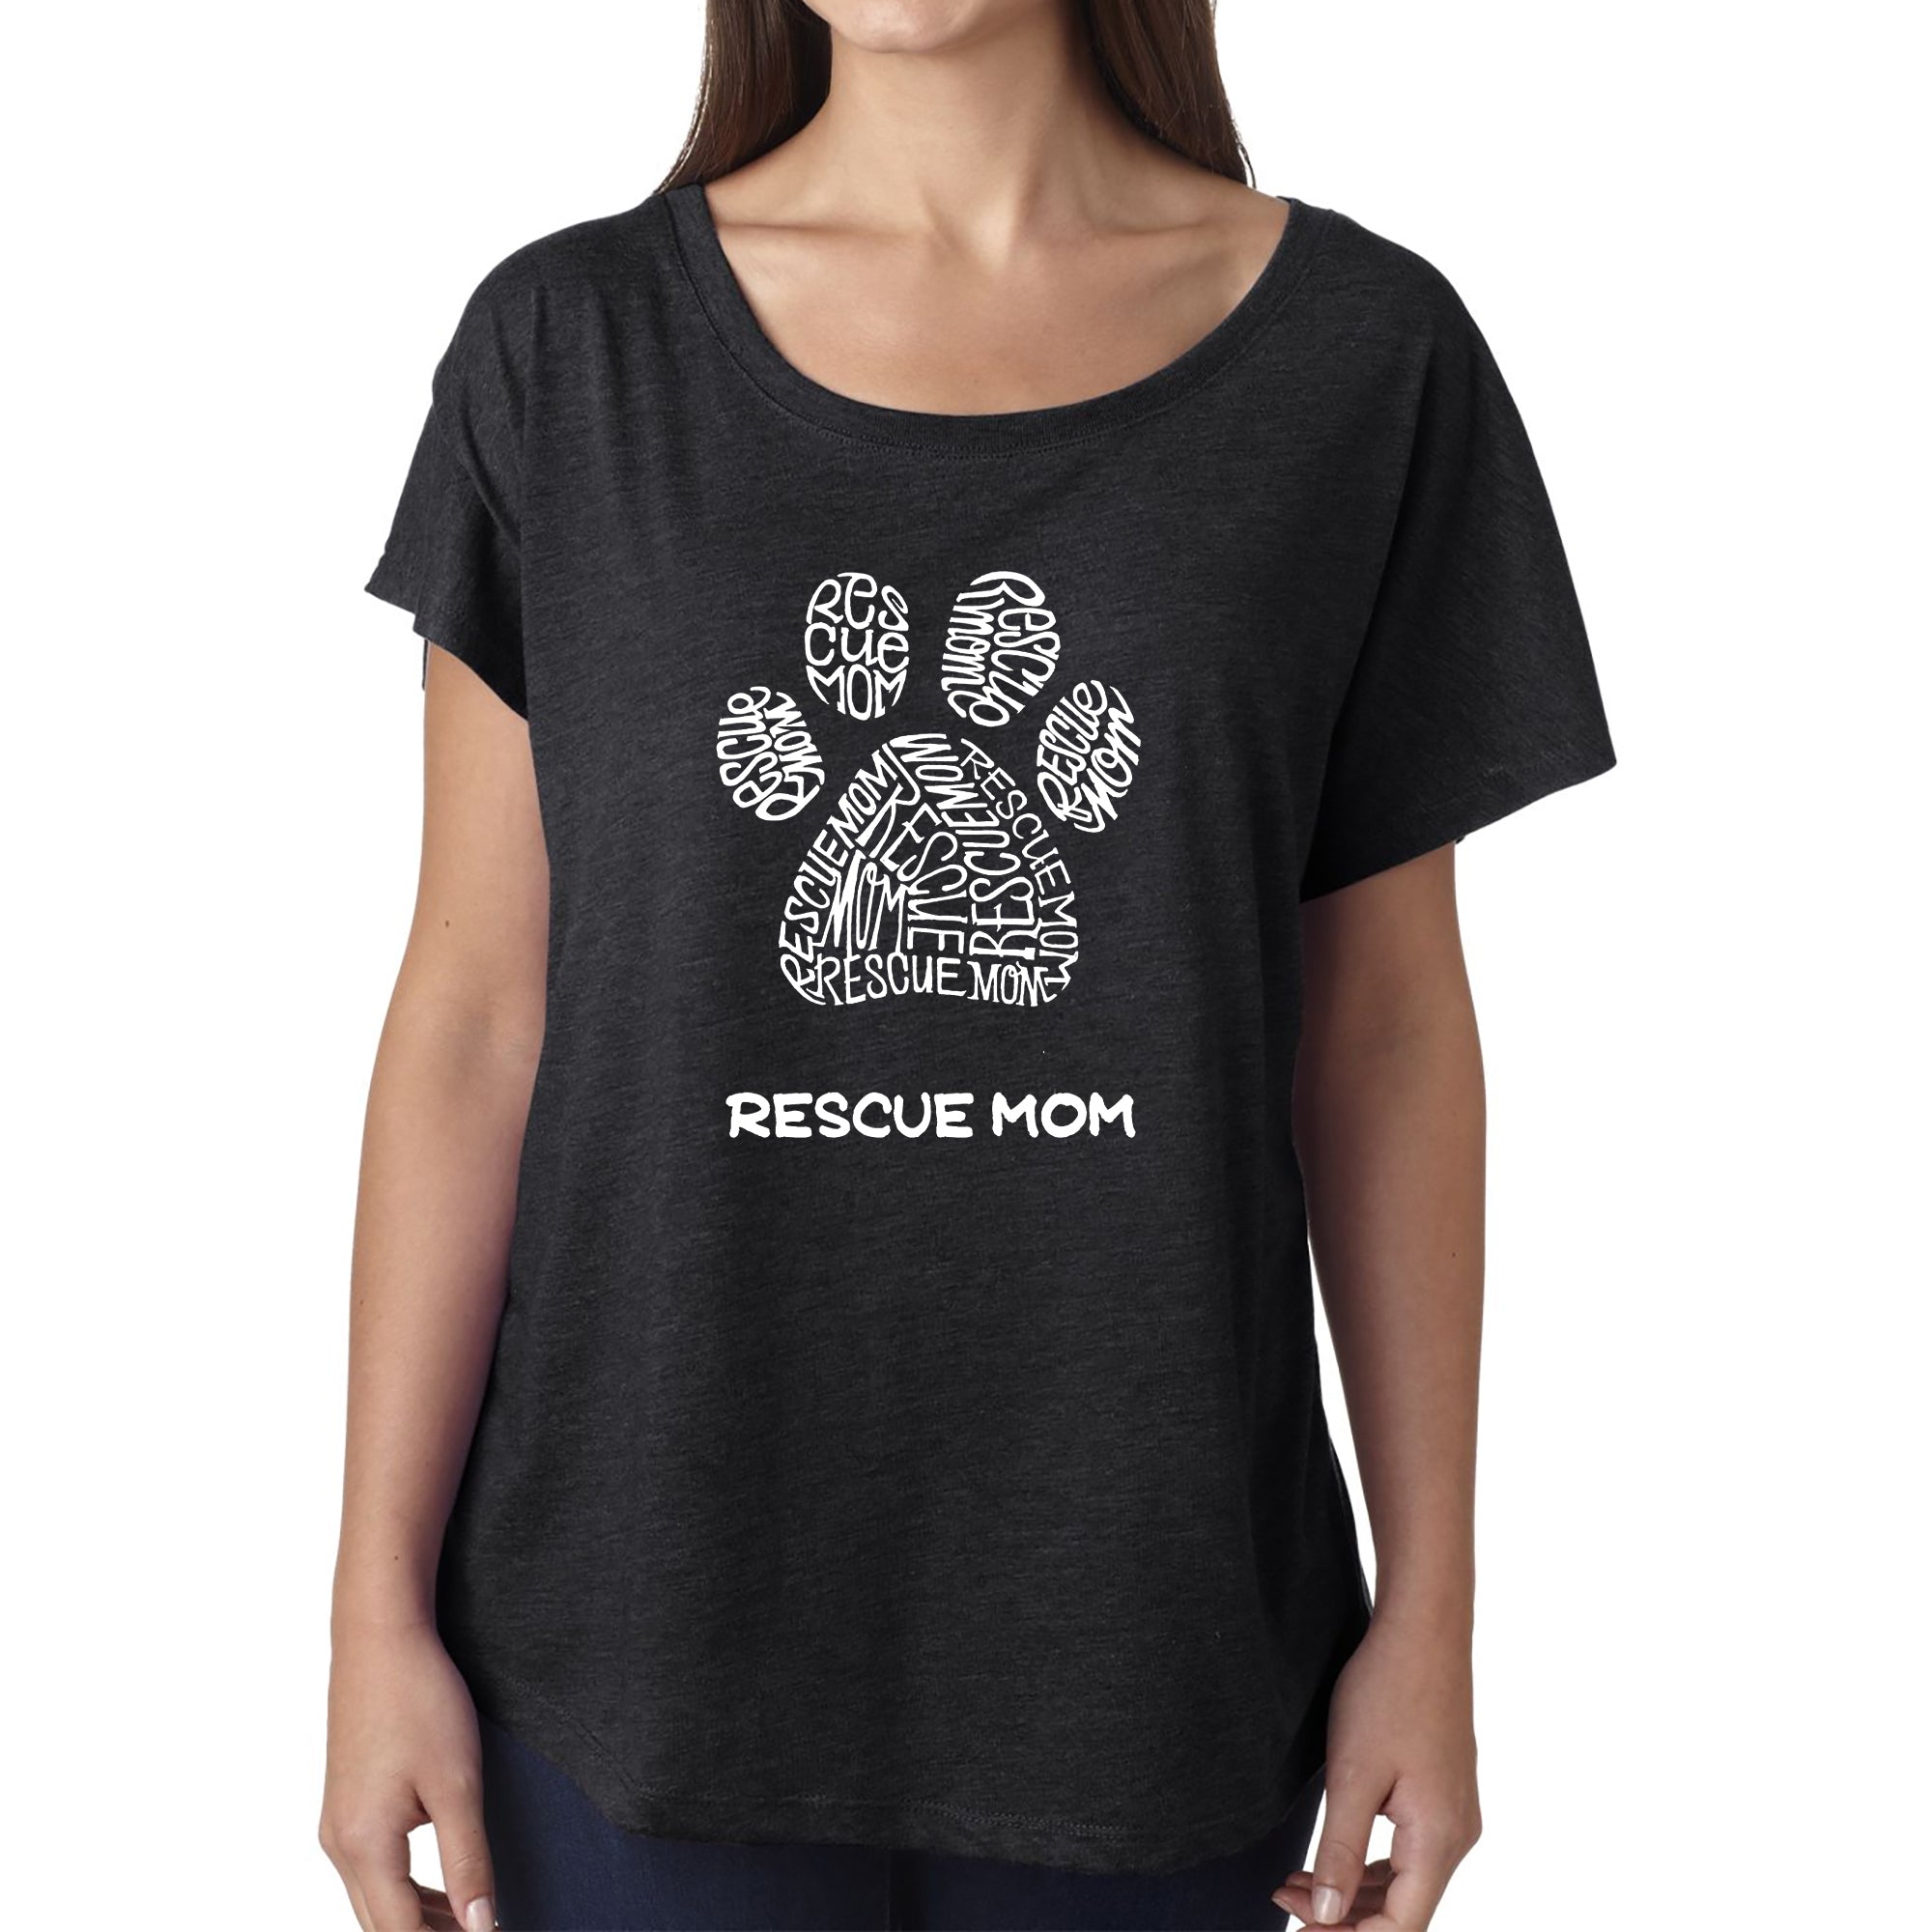 Rescue Mom - Women's Loose Fit Dolman Cut Word Art Shirt - Black - Large